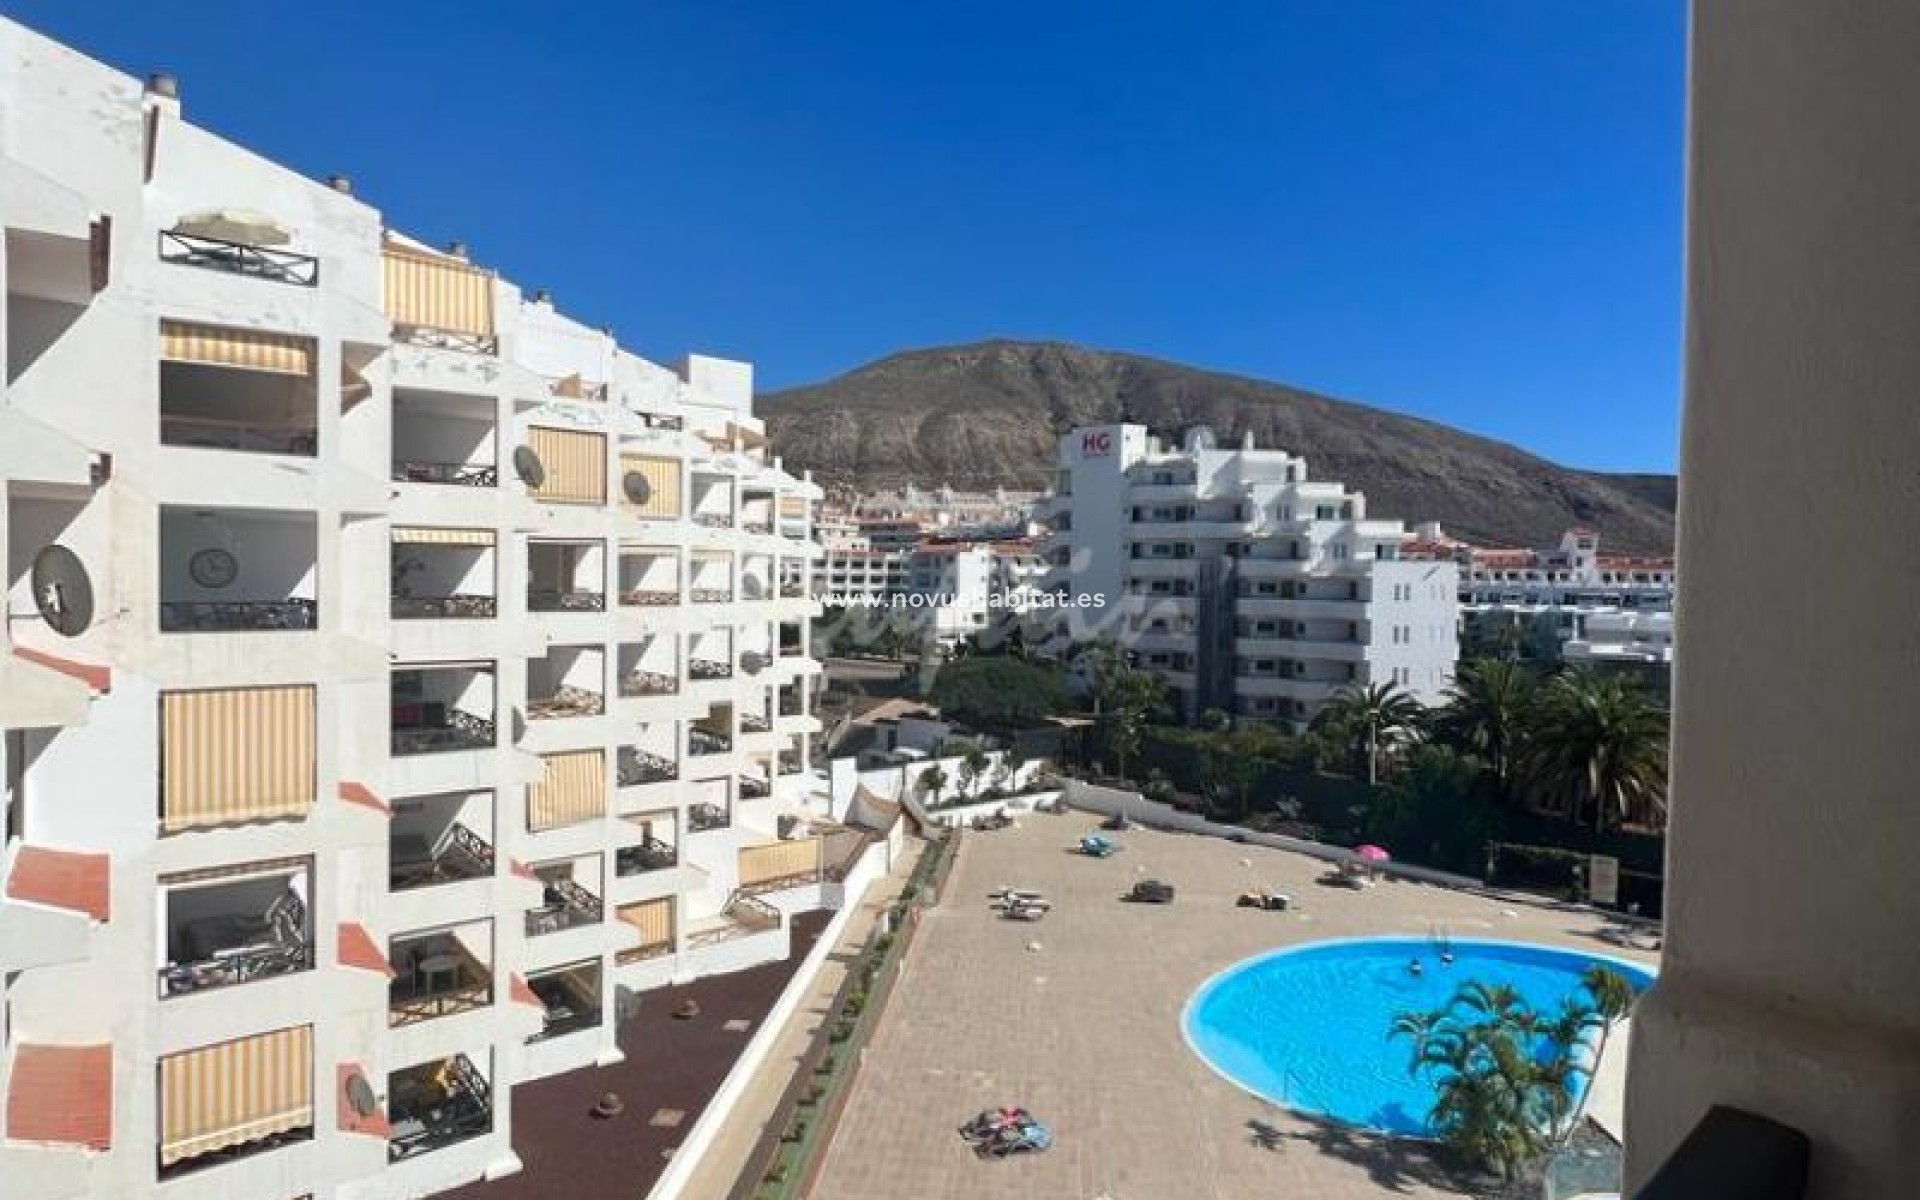 Resale - Apartment - Los Cristianos - avda amsterdam 2 38650 Los Cristianos Arona Tenerife